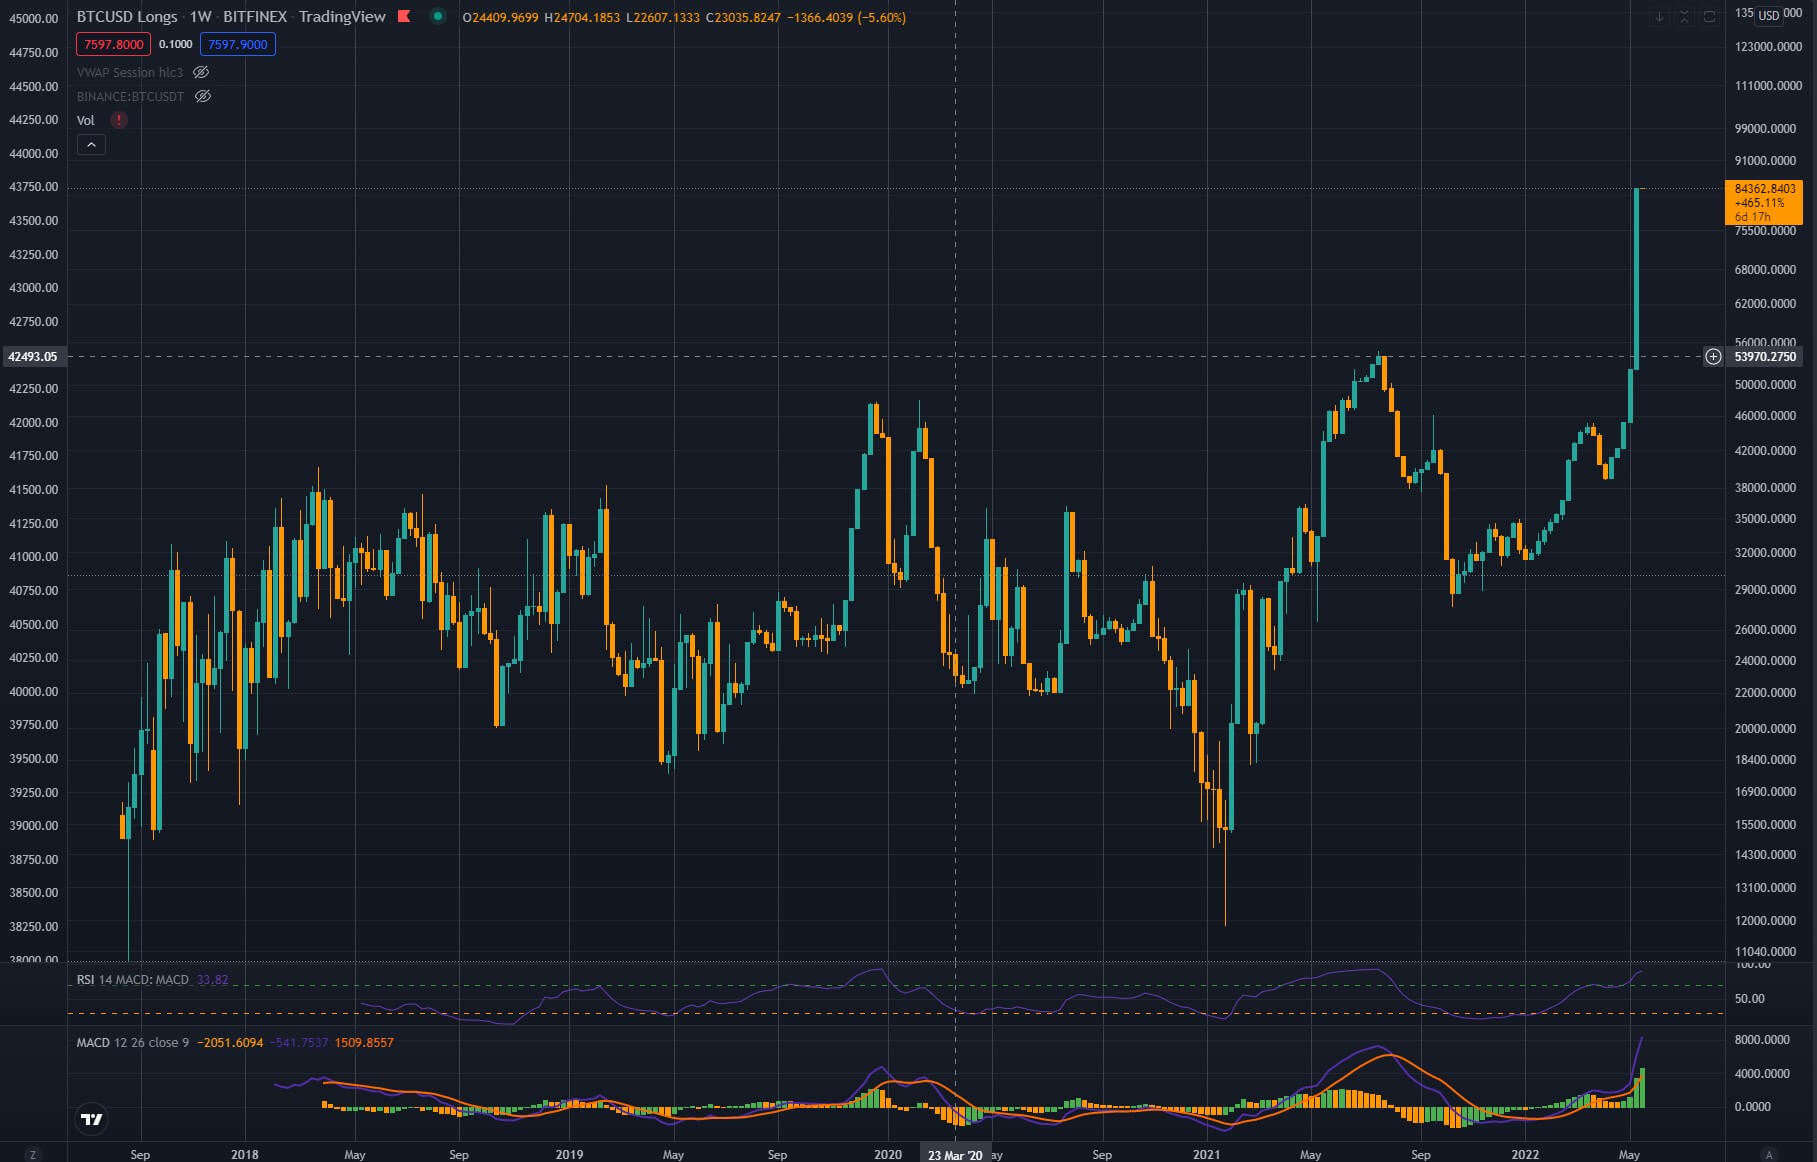 Bitcoin long positions spike 60% on Bitfinex